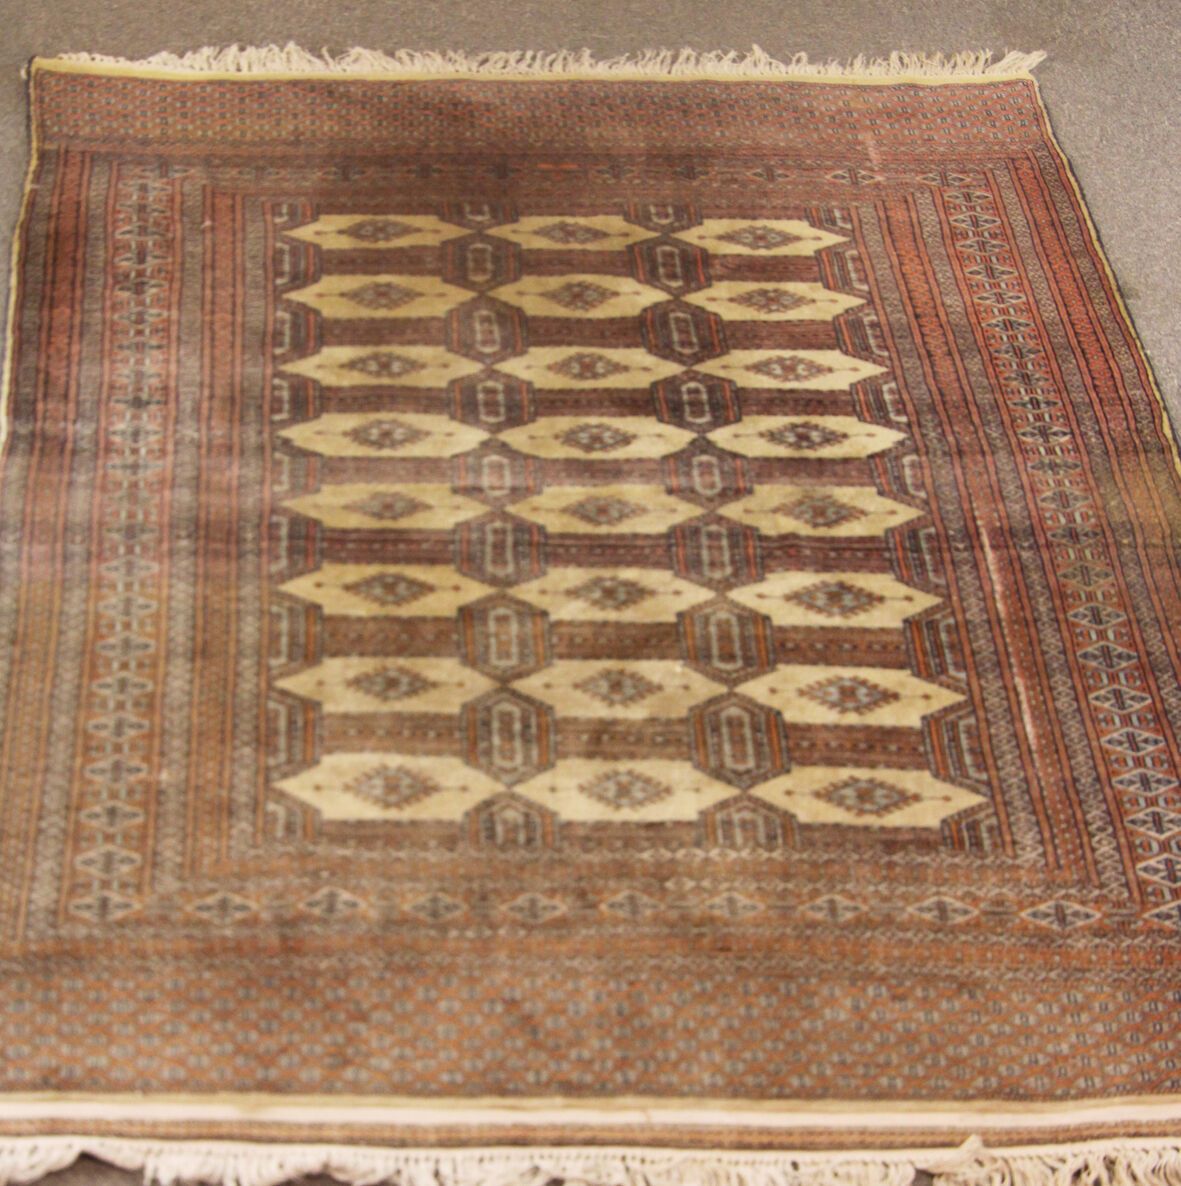 Null Pakistani carpet with medallion decoration. 200 x 150 cm

Wear of use